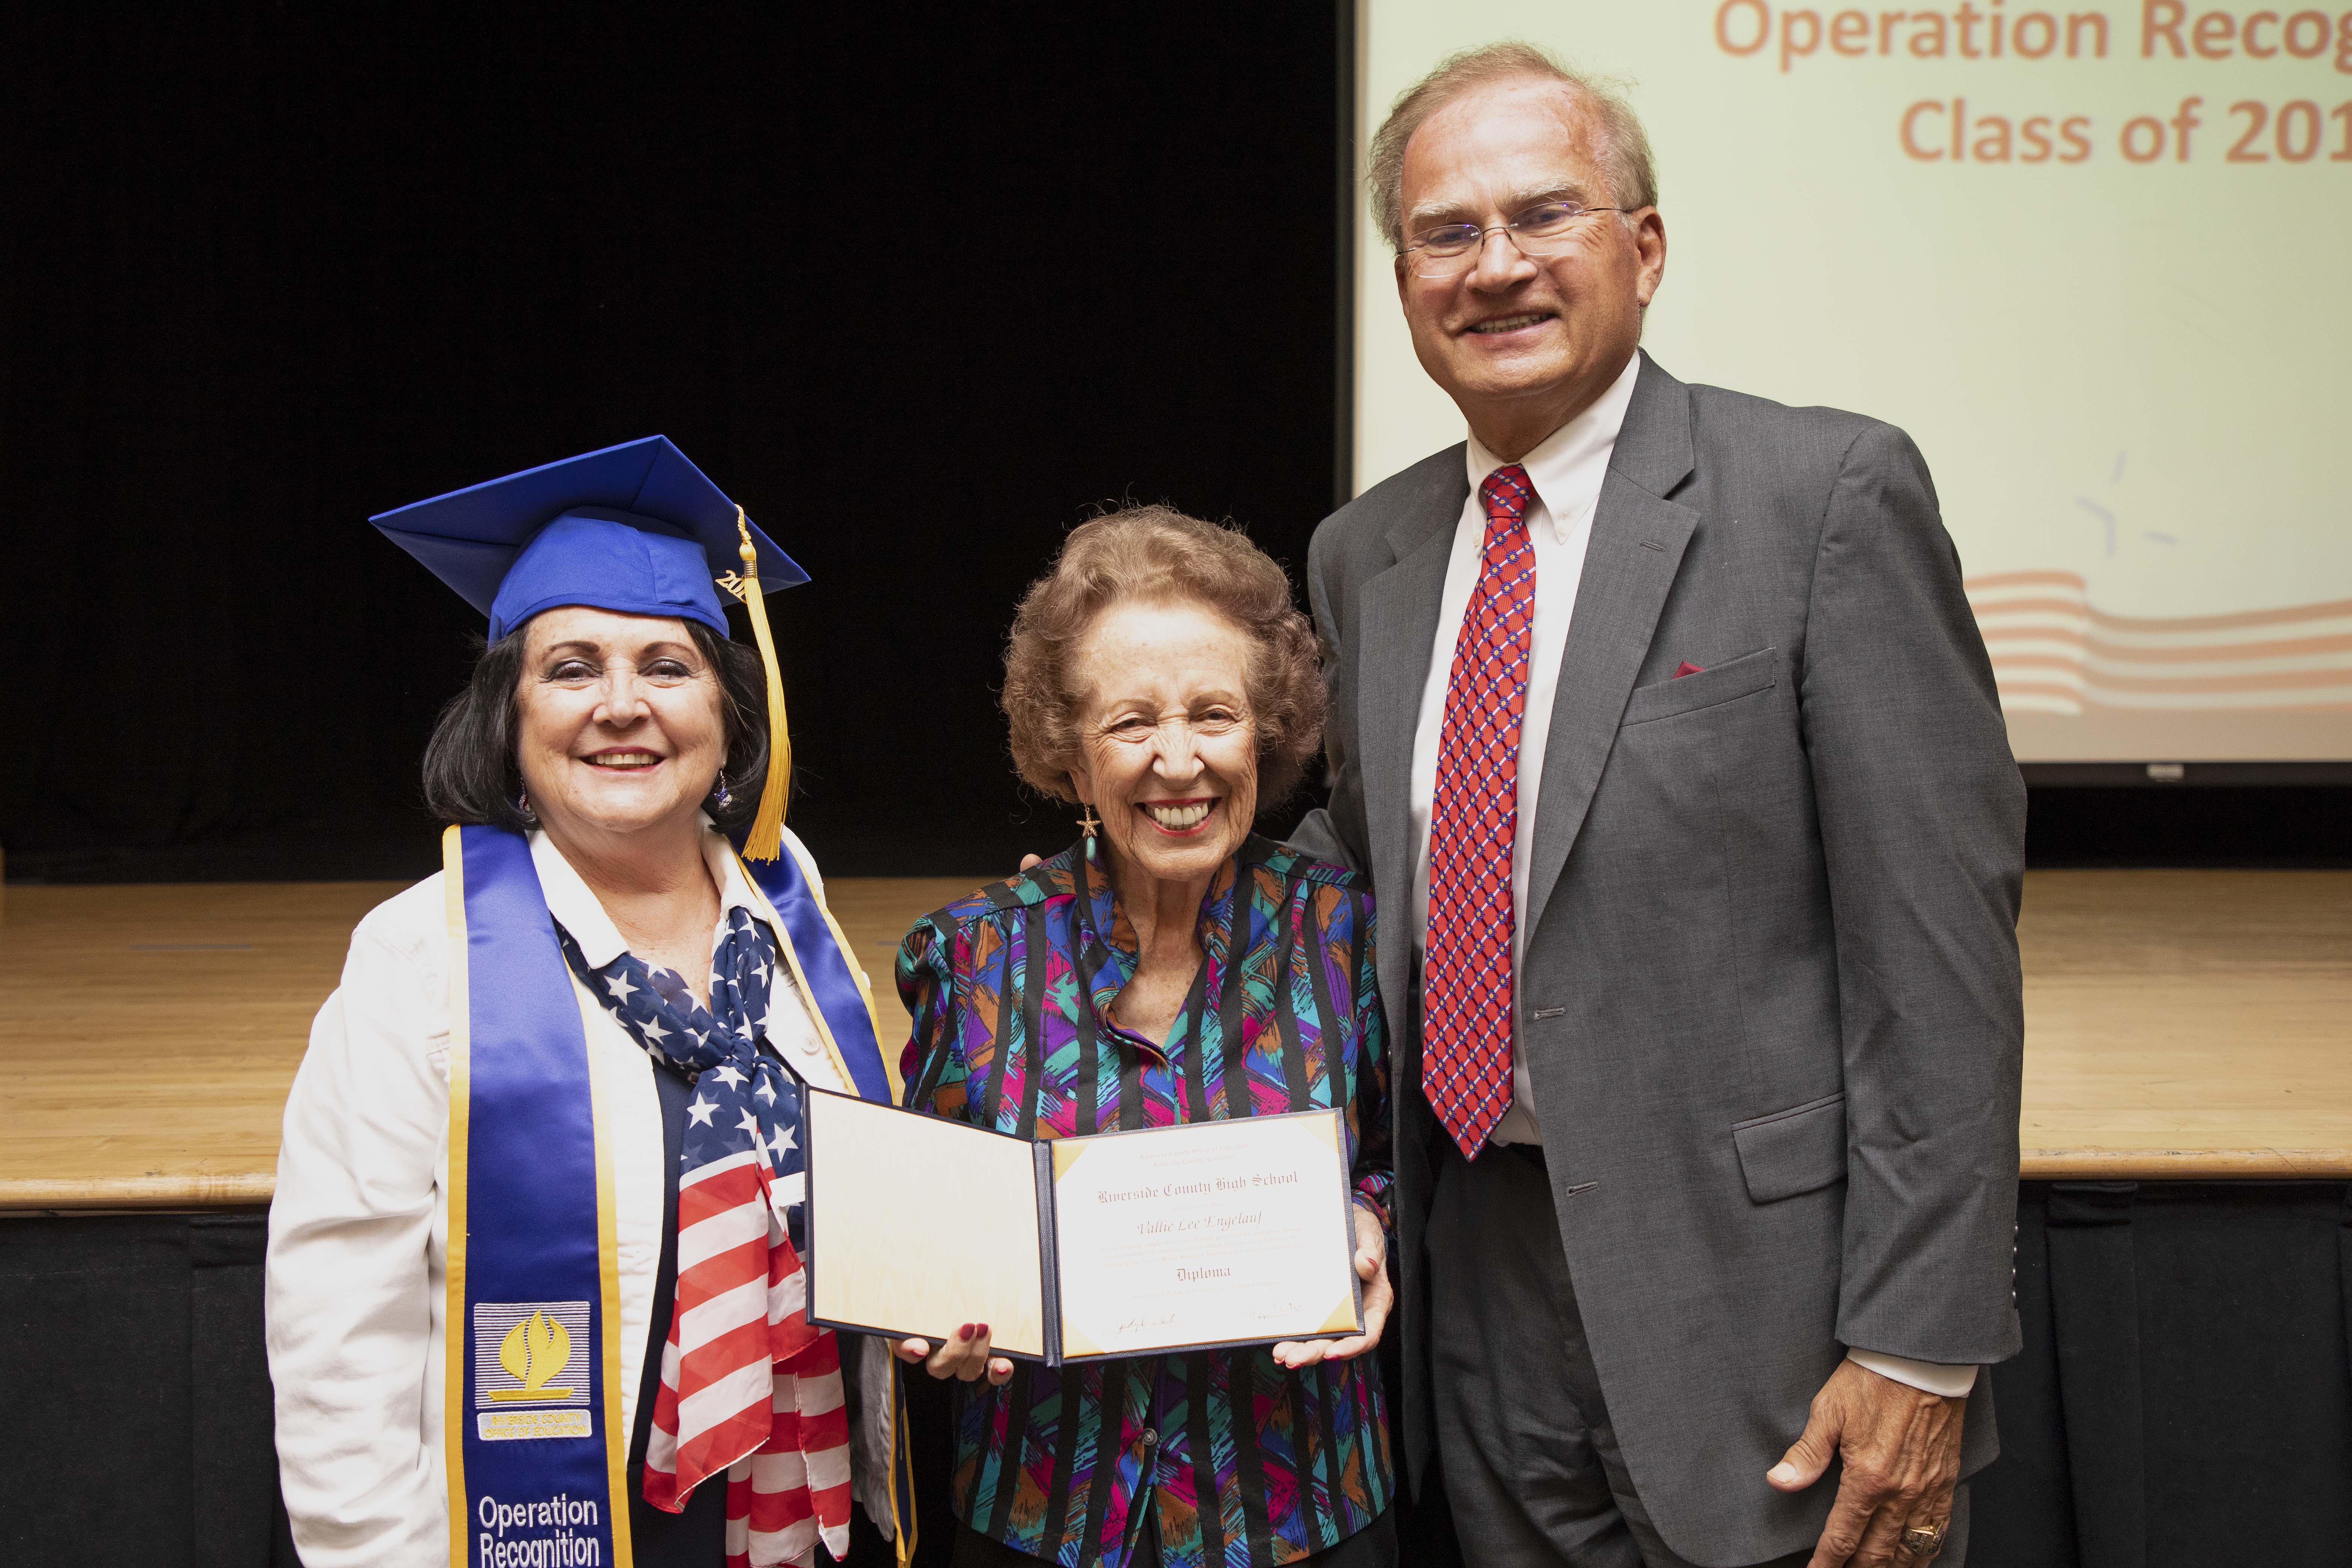 Linda Chard accepts Father's diploma